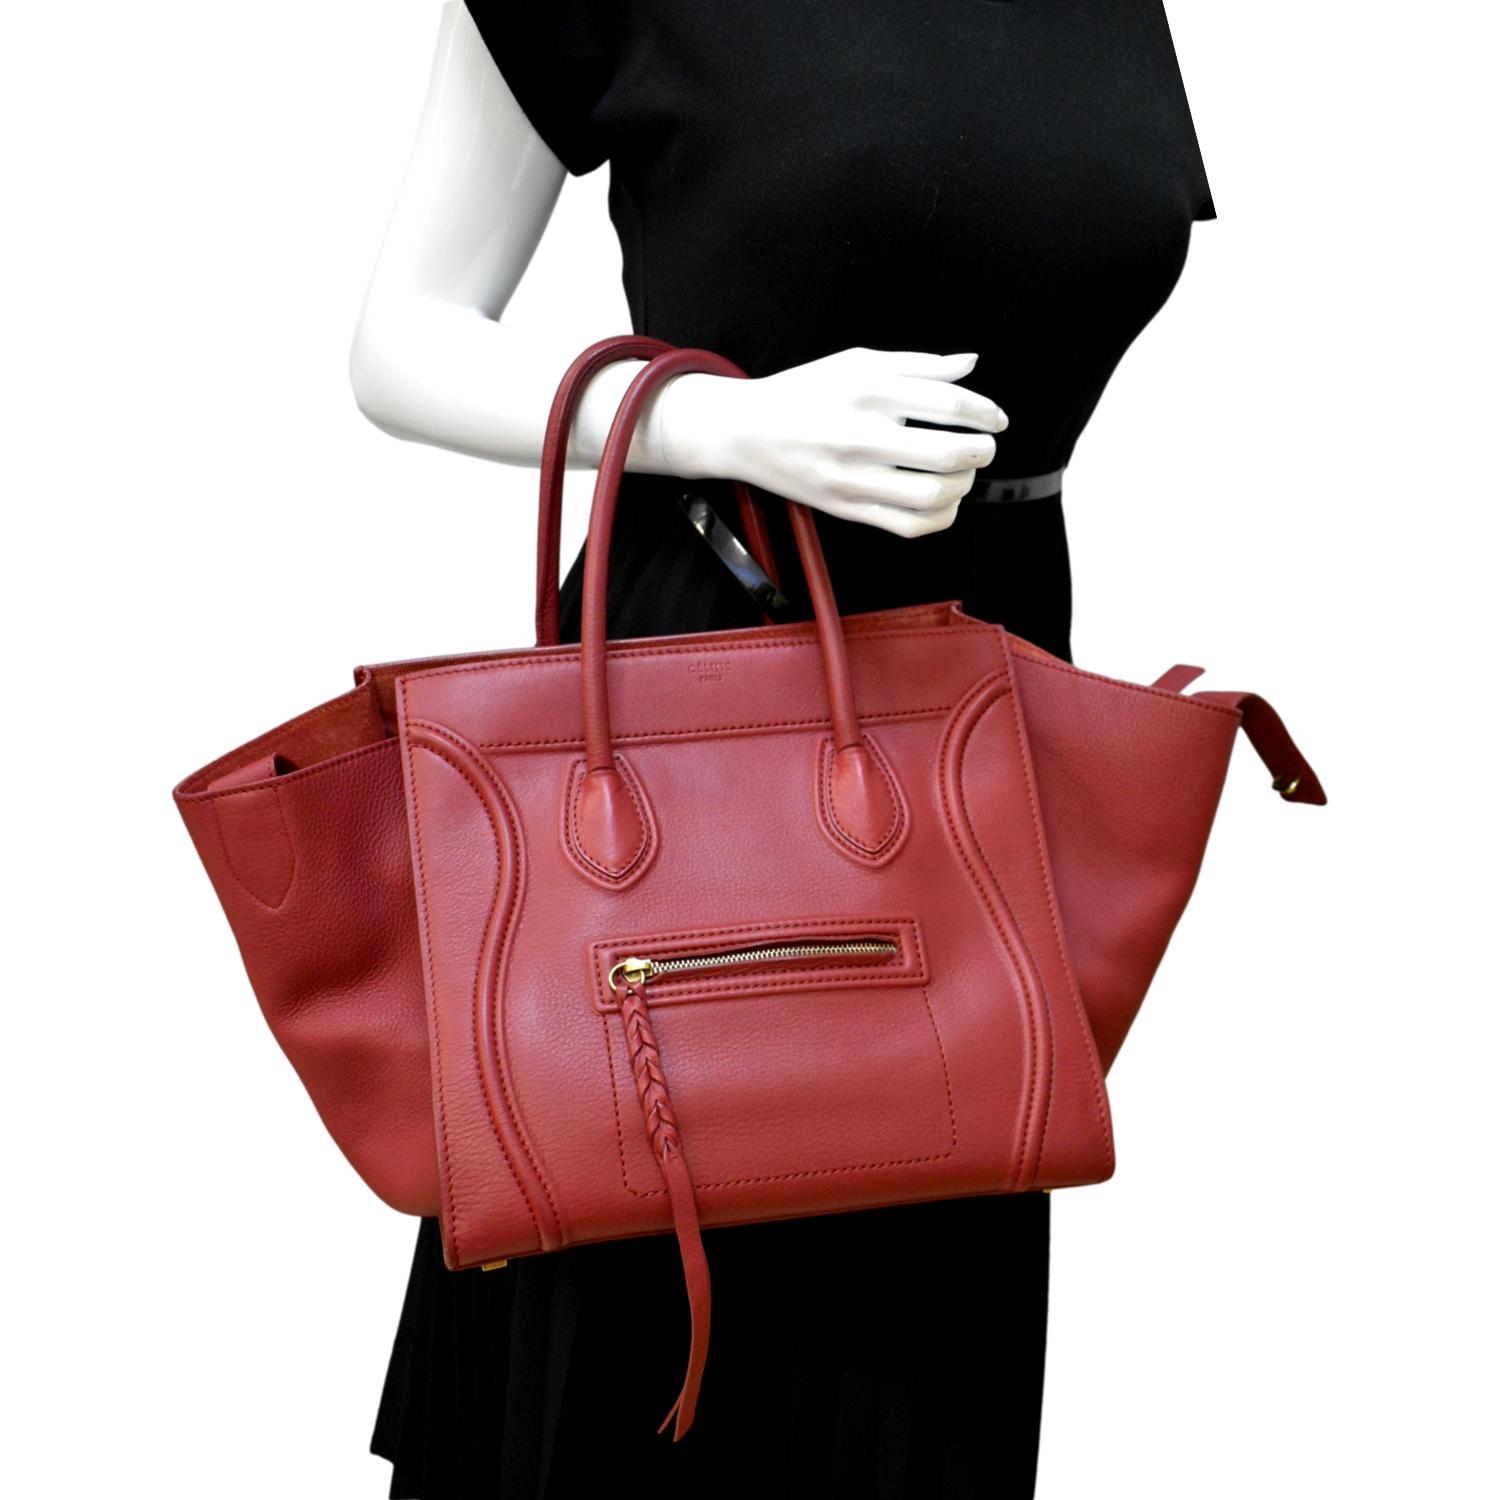 Celine Luggage Leather Tote Bag